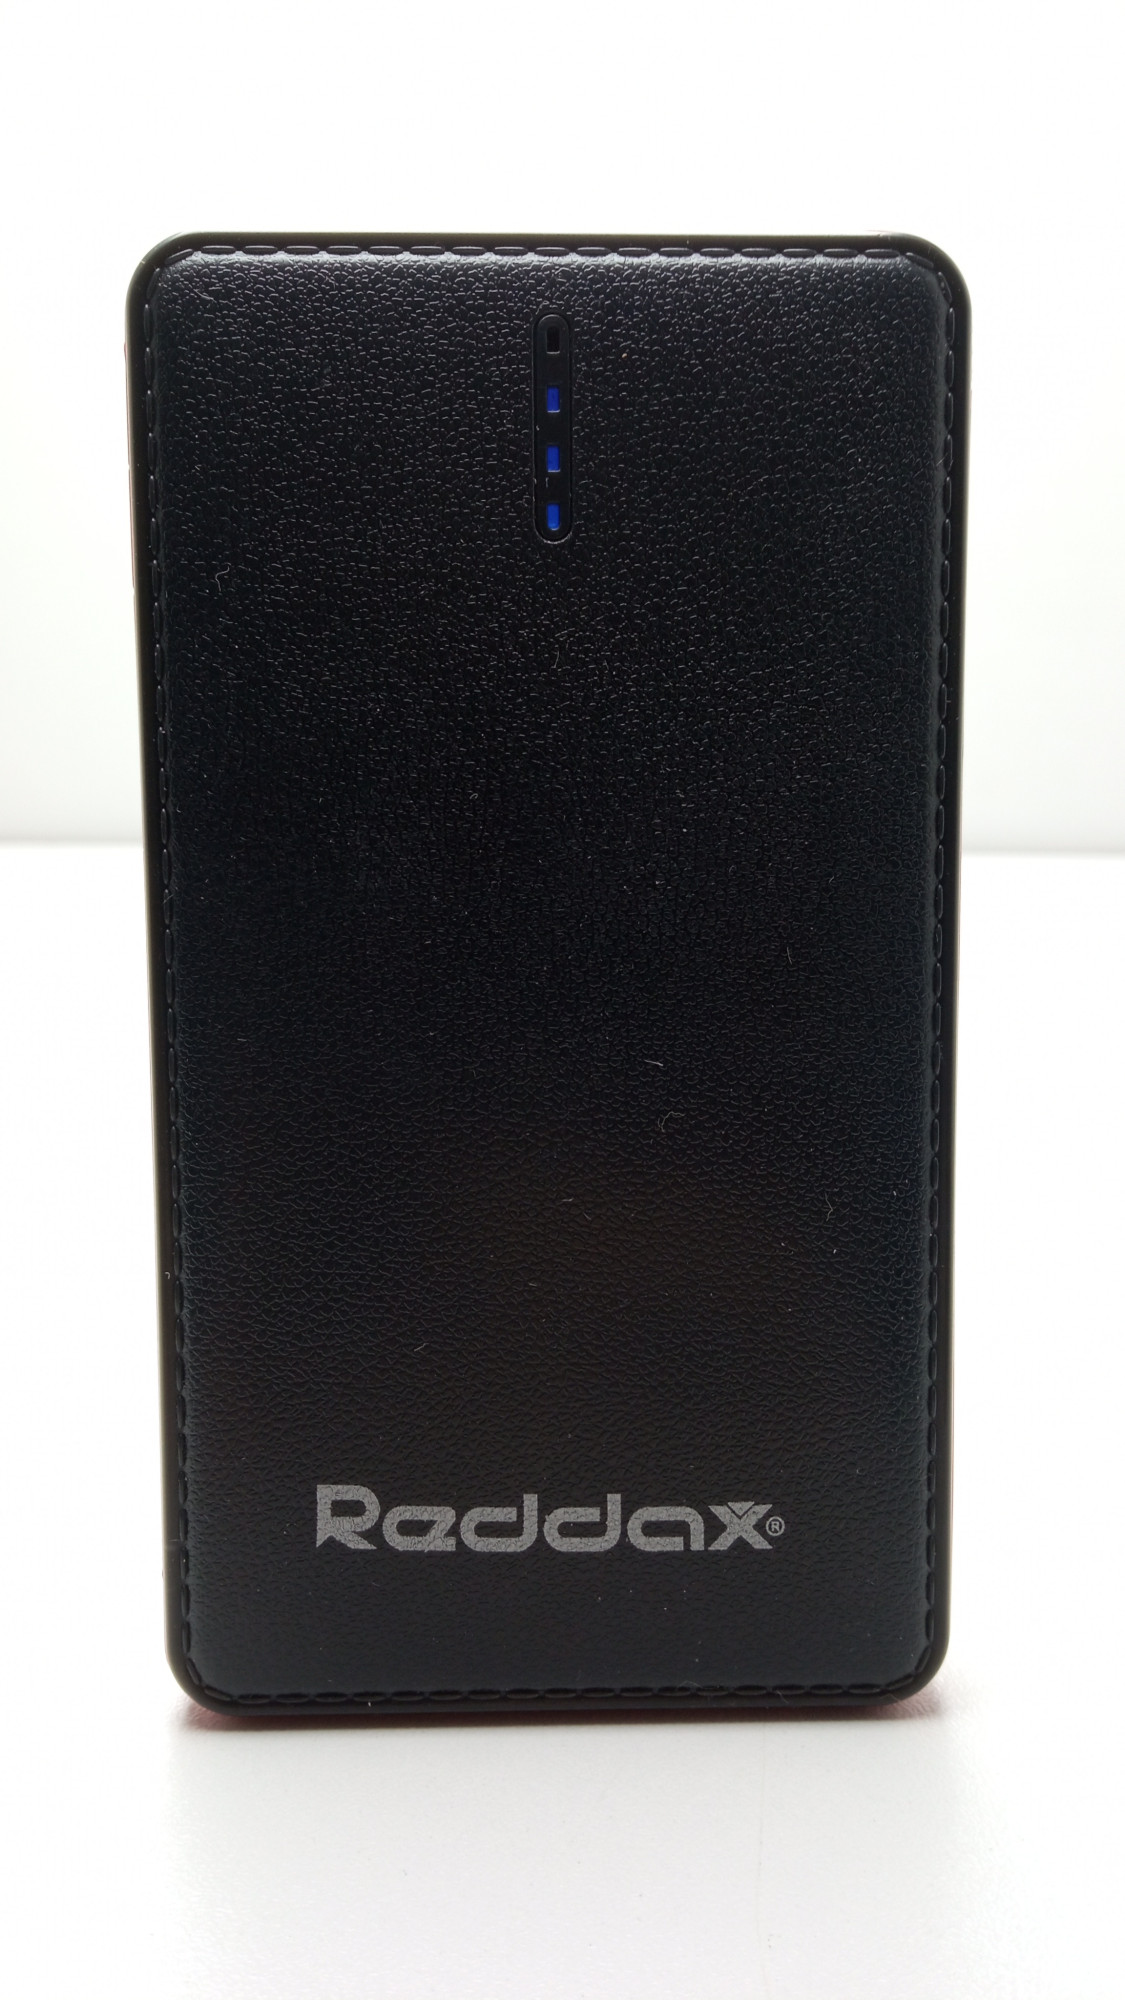 Powerbank Reddax RDX-205 6800 mAh 0